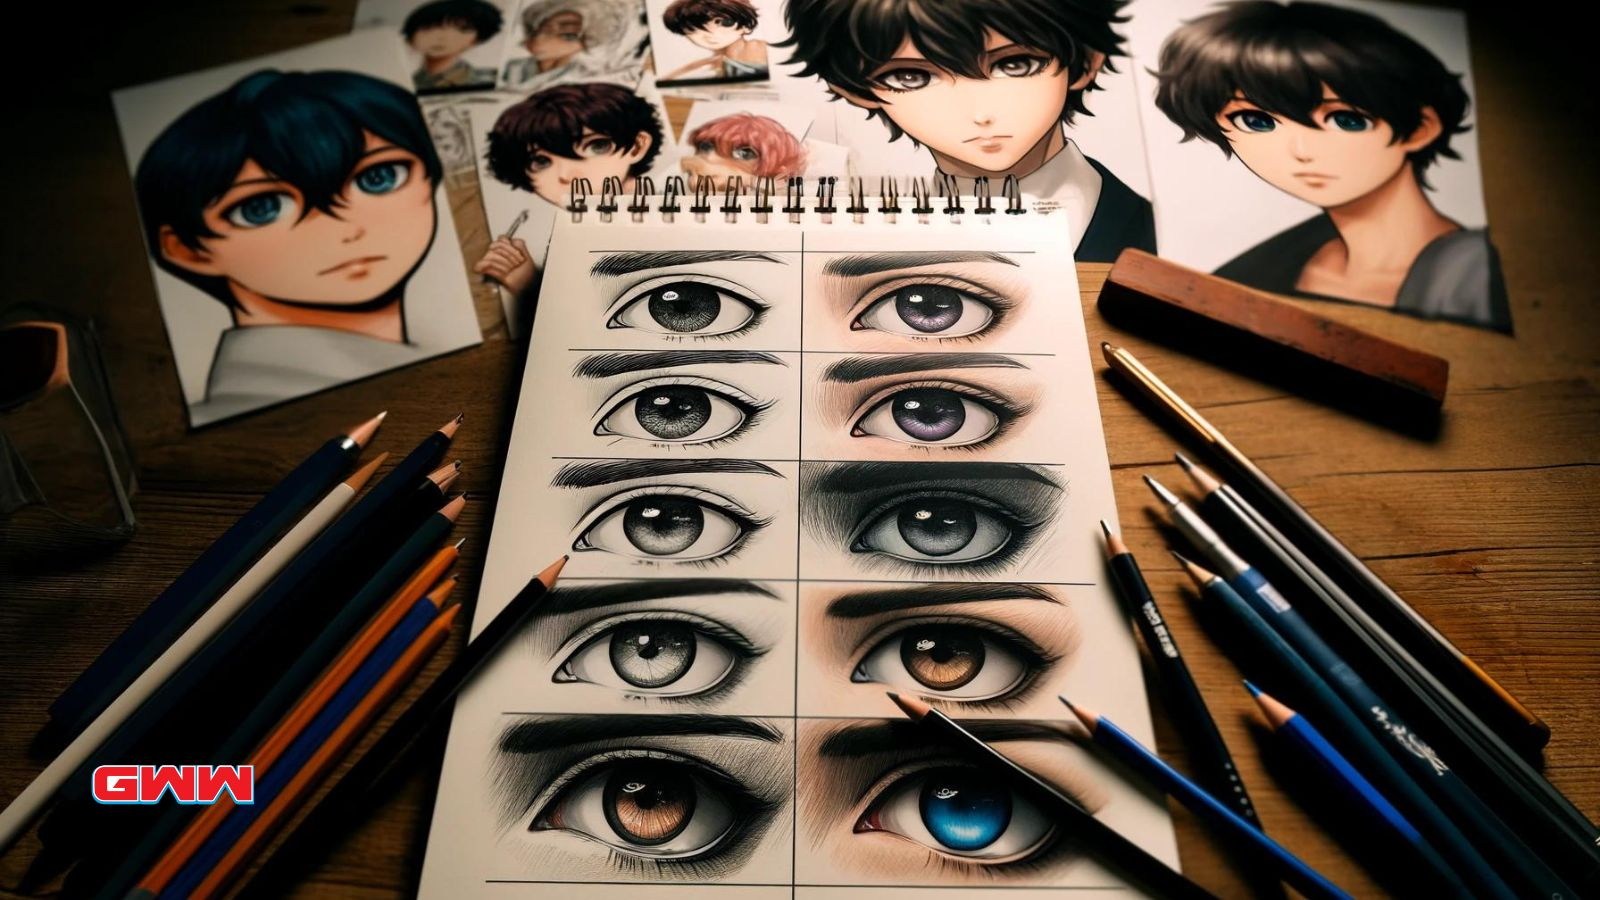 Drawing anime boy eyes, sketchbook with various eye styles, pencils around